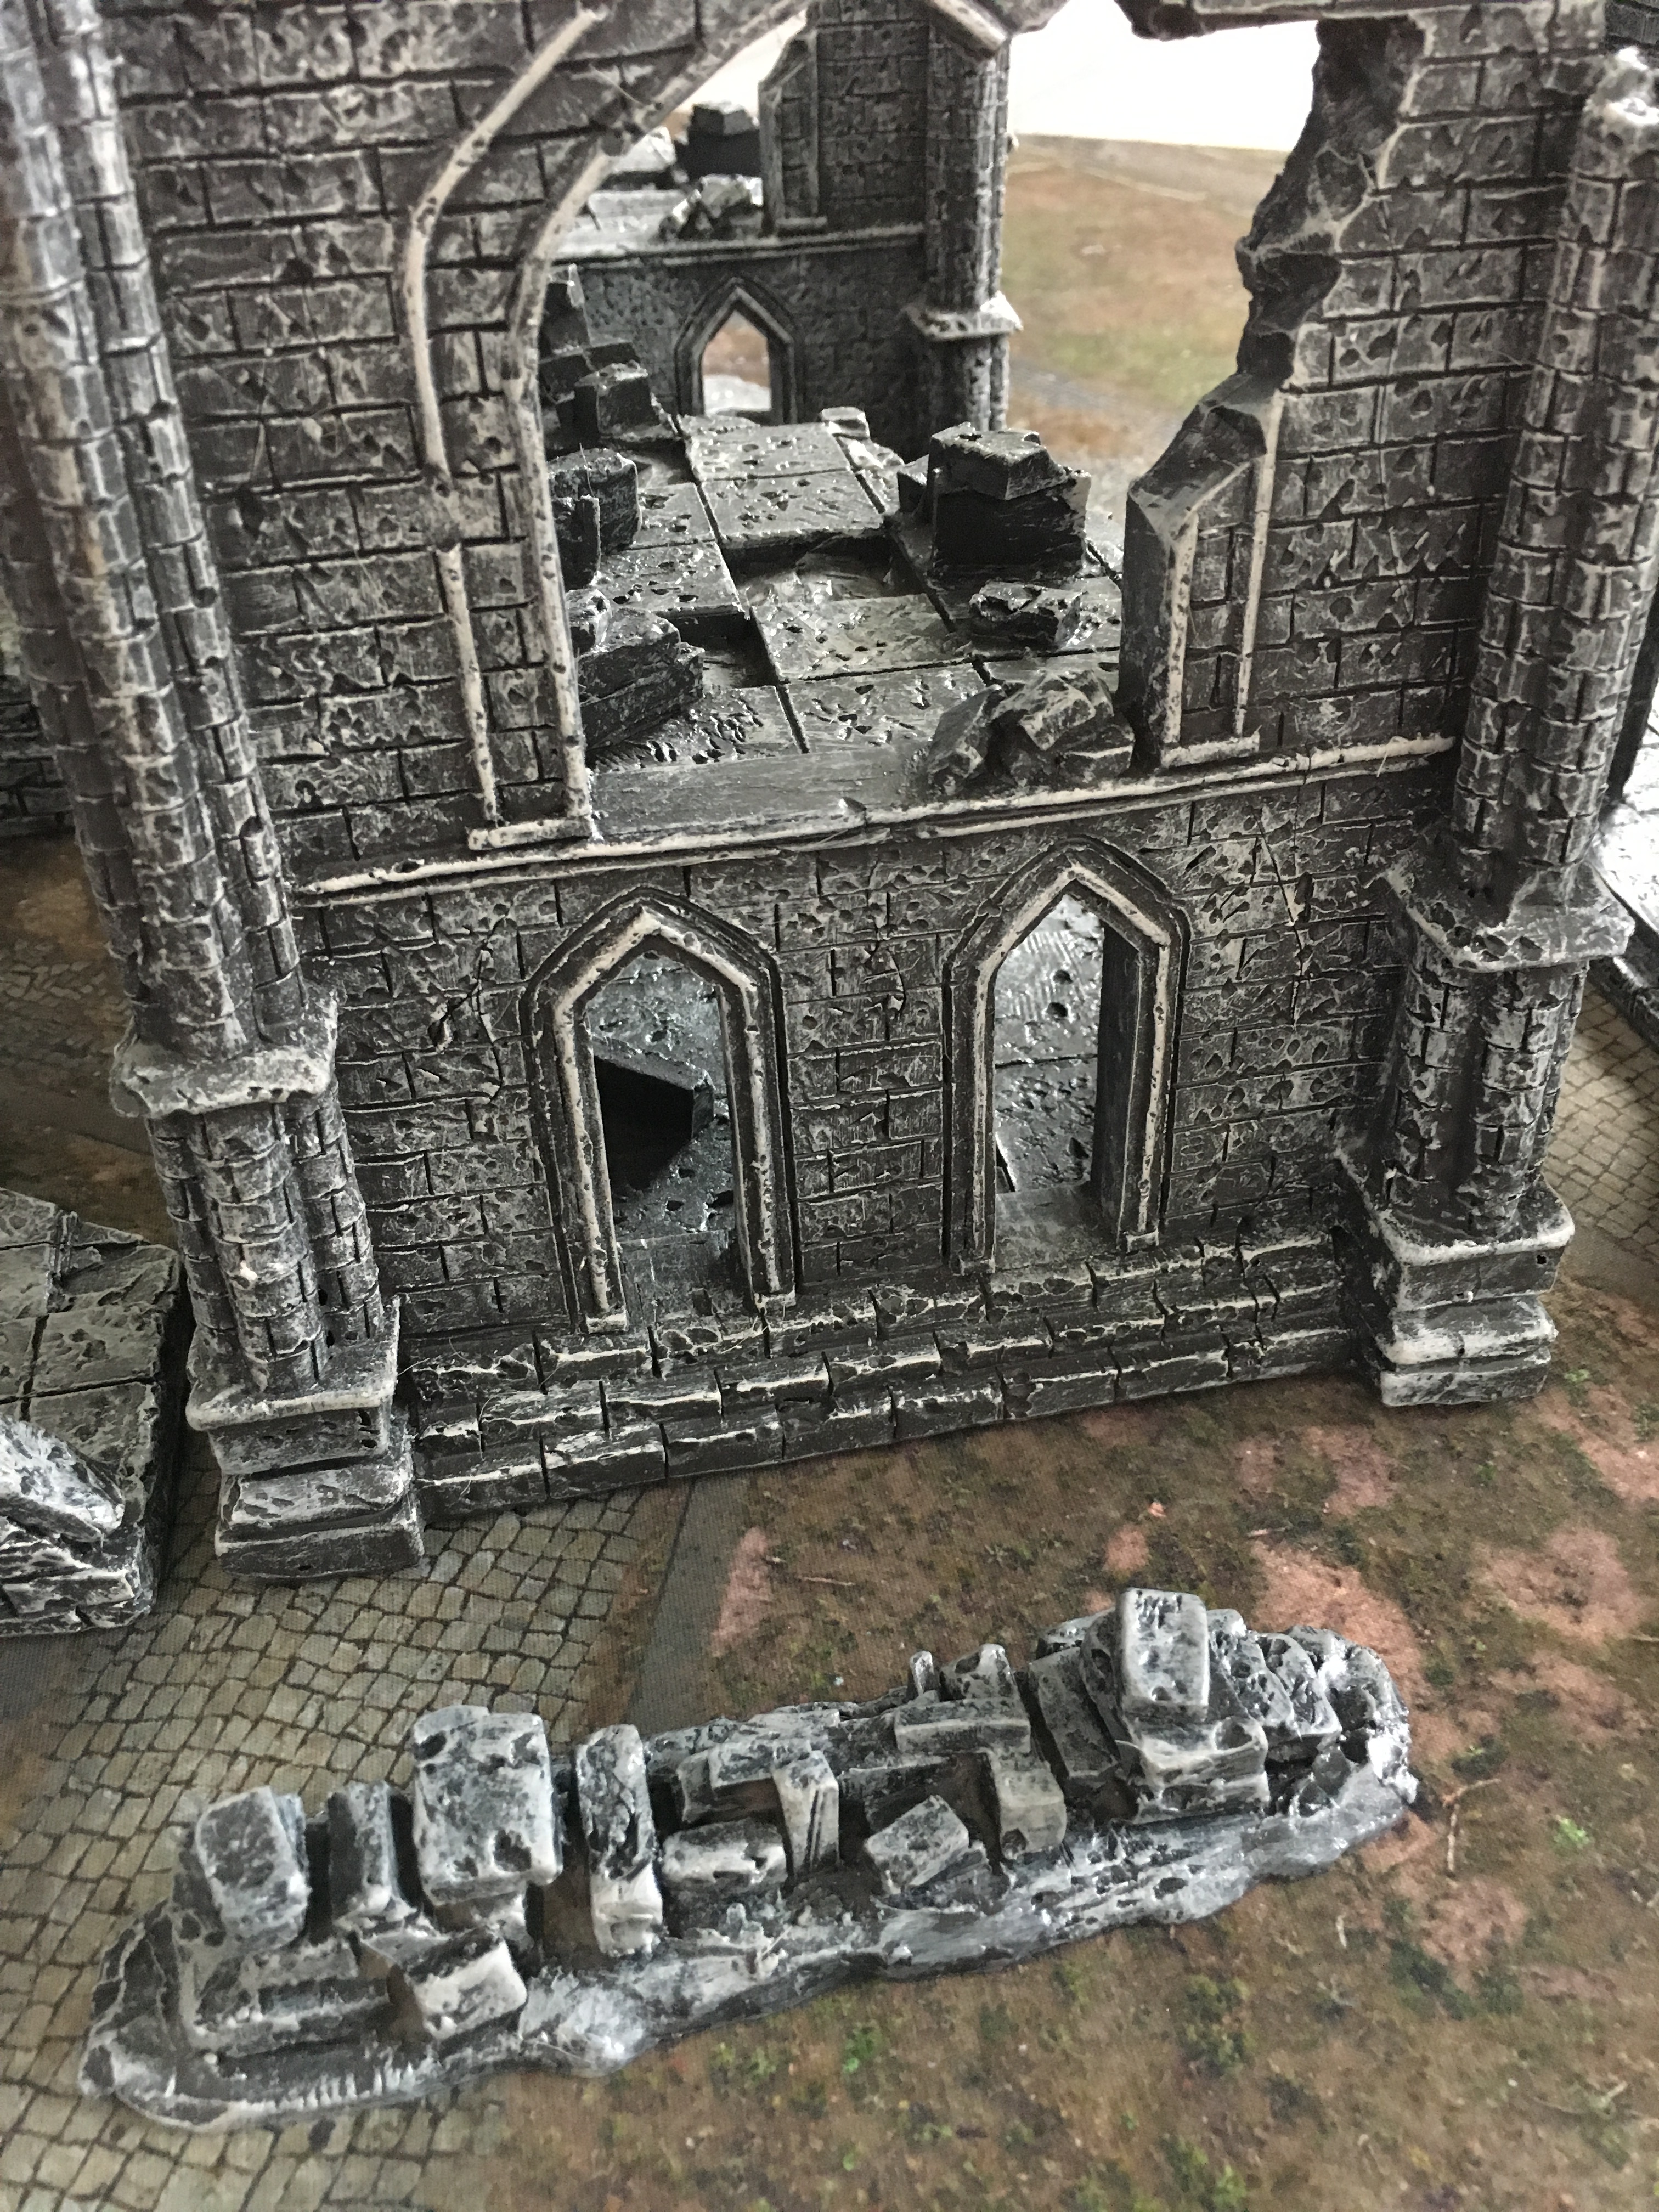 Prepainted GOTHIC Ruins set – perfect warhammer wargaming scenery